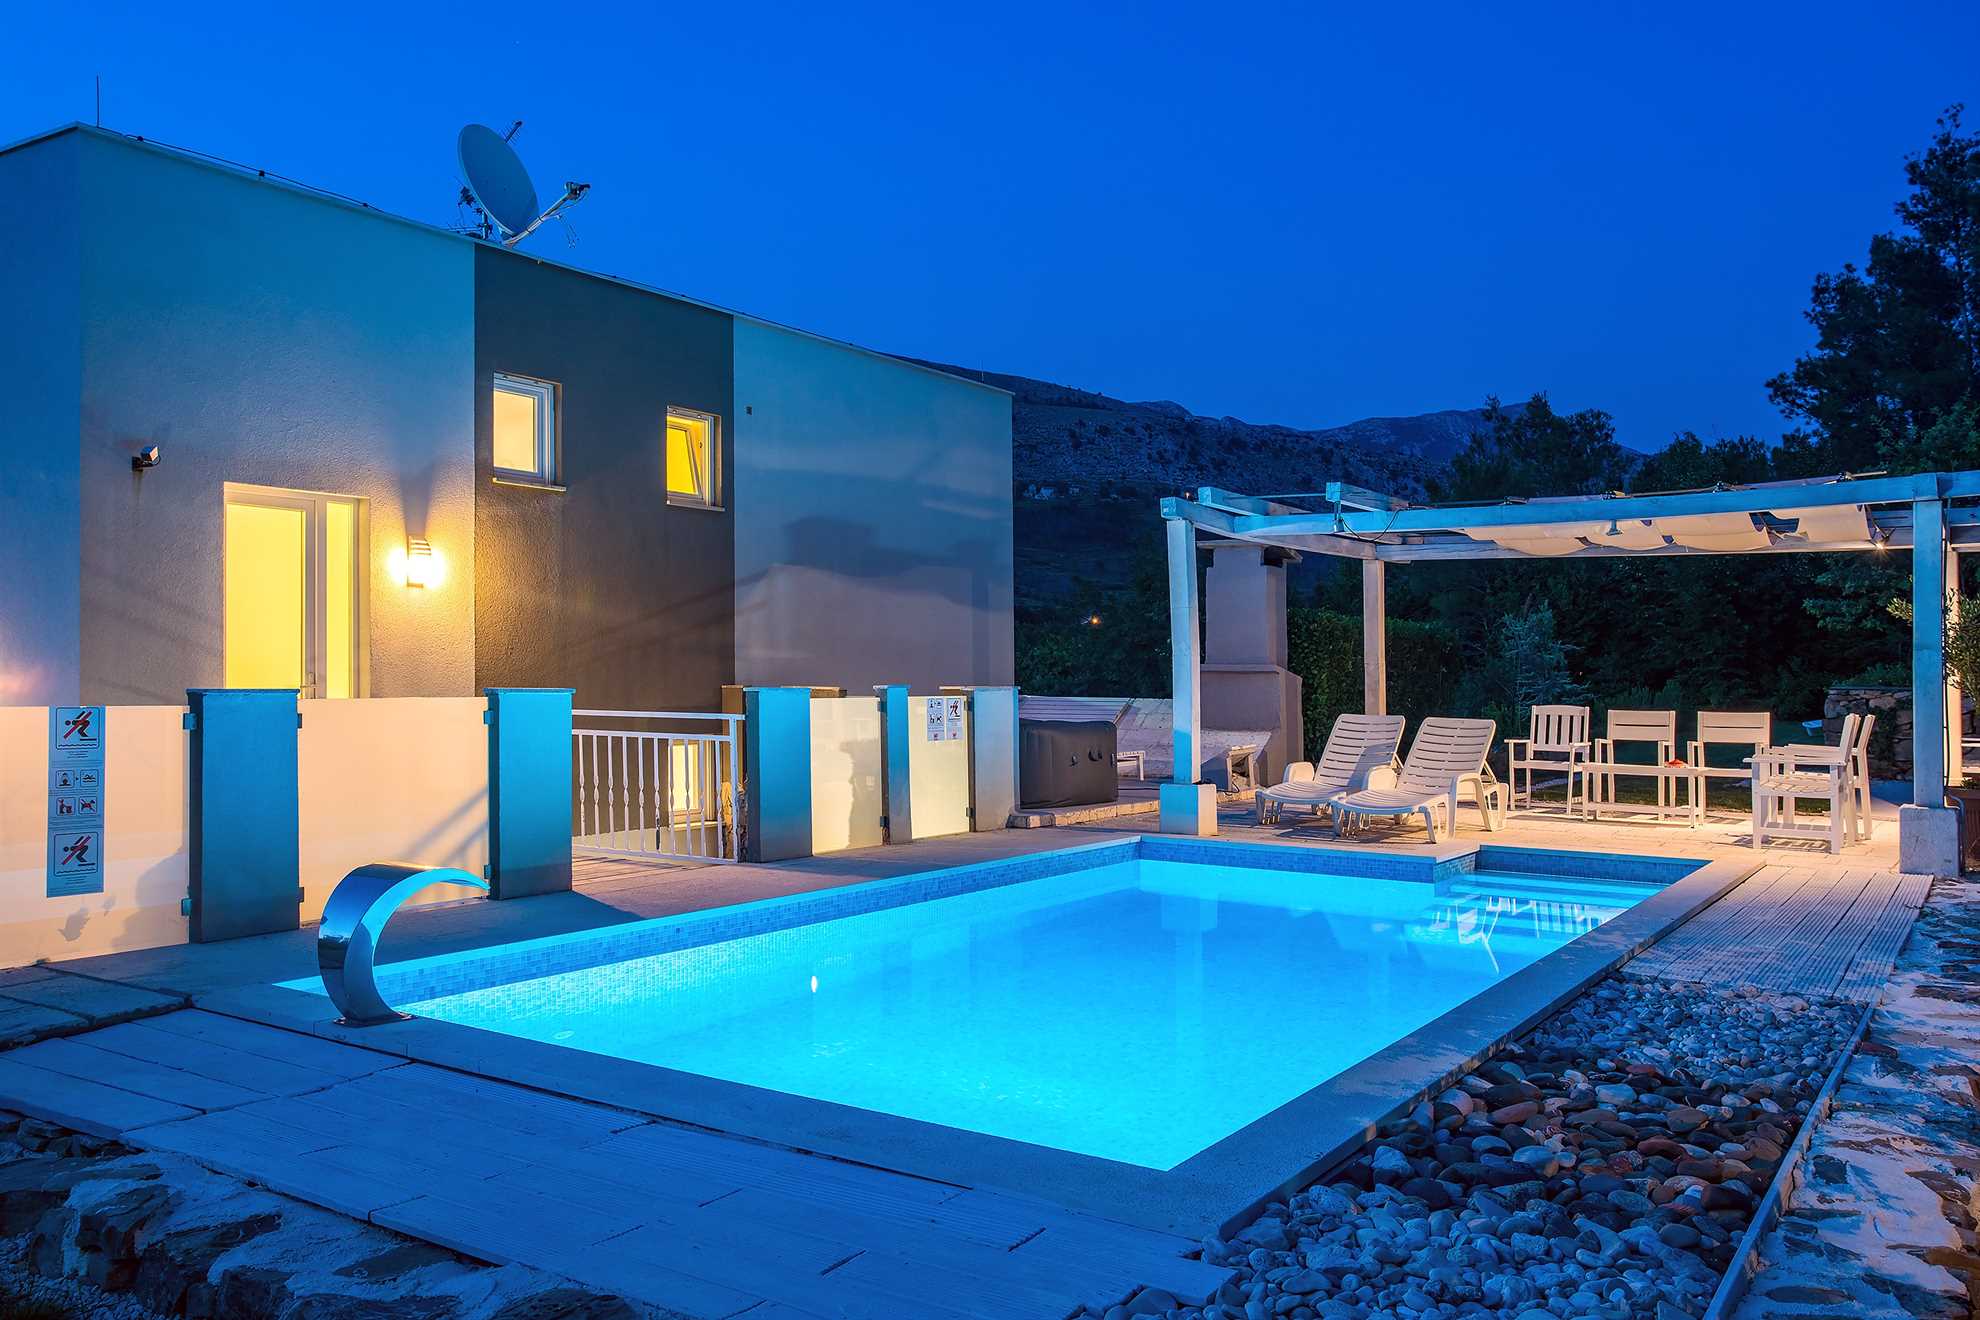 House for sale in Split region, nature, garage, swimmin pool, garden